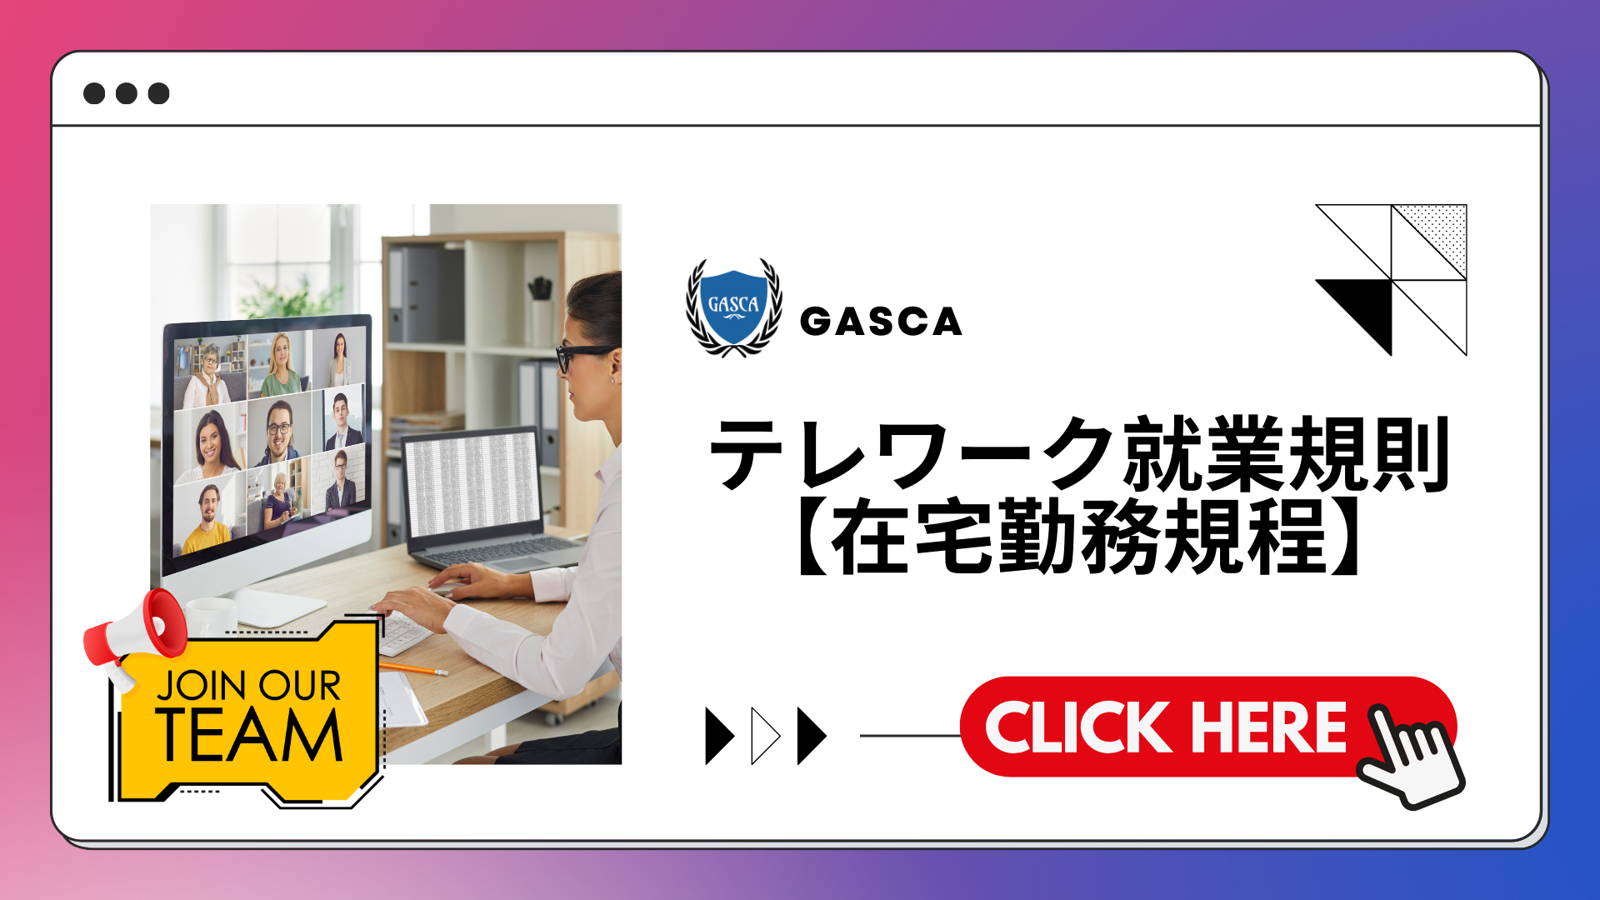 Join Us Now! GASCA-テレワーク就業規則【在宅勤務規程】